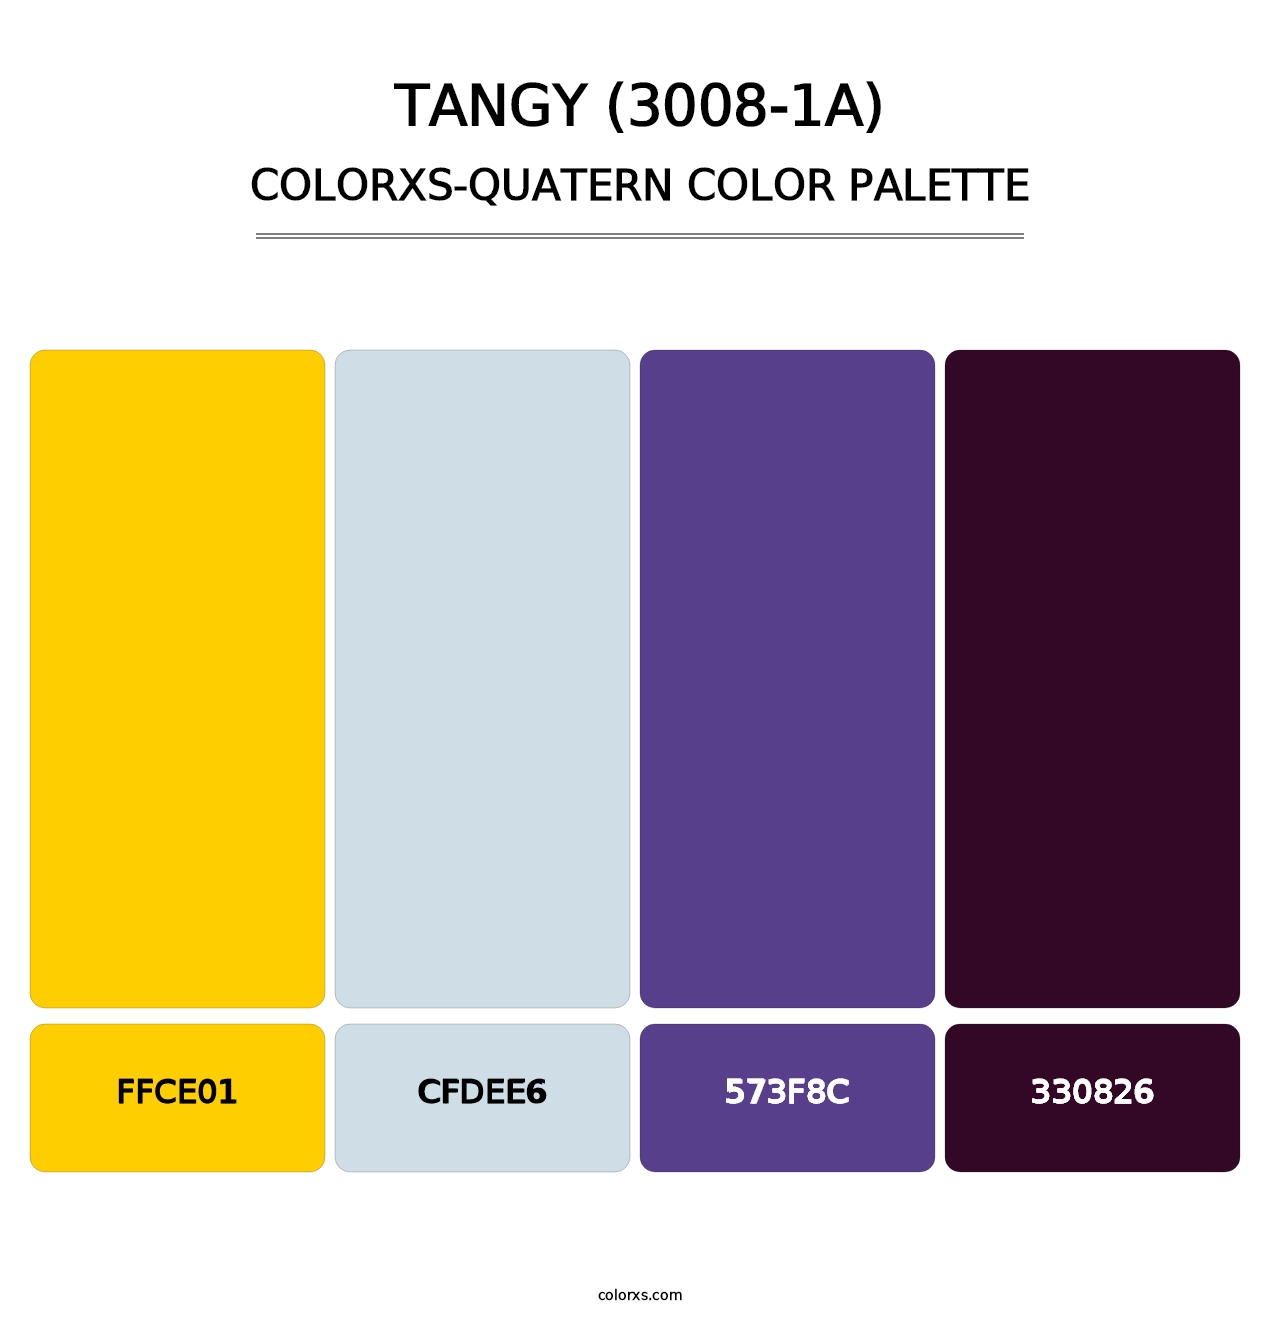 Tangy (3008-1A) - Colorxs Quatern Palette